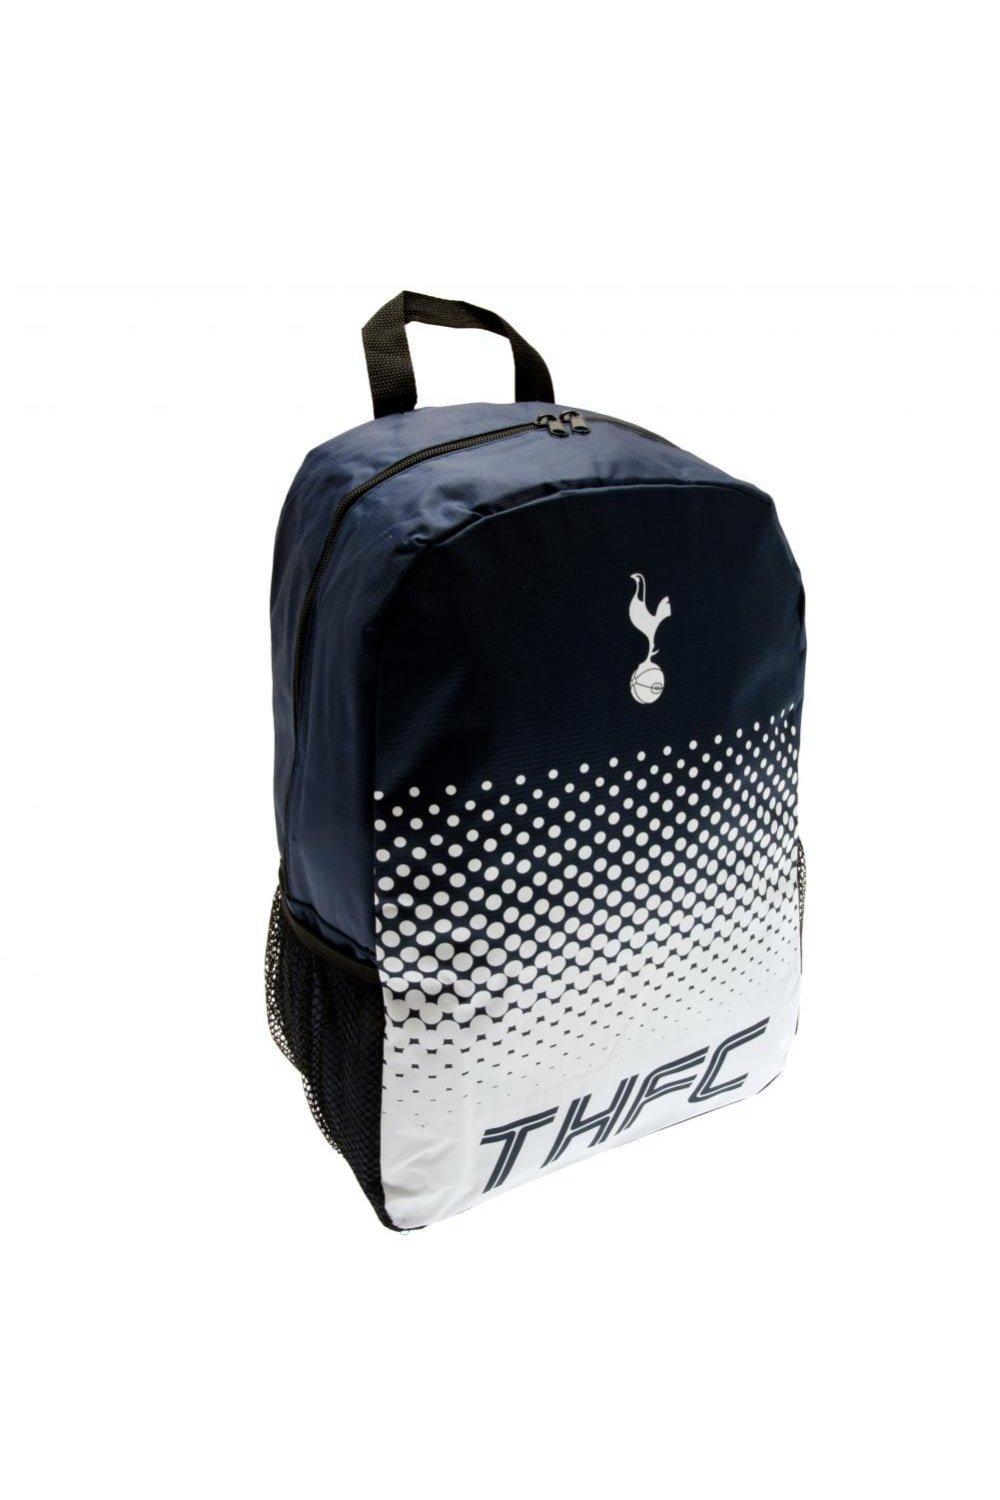 Рюкзак Tottenham Hotspur FC, темно-синий tottenham hotspur 3315526 s белый